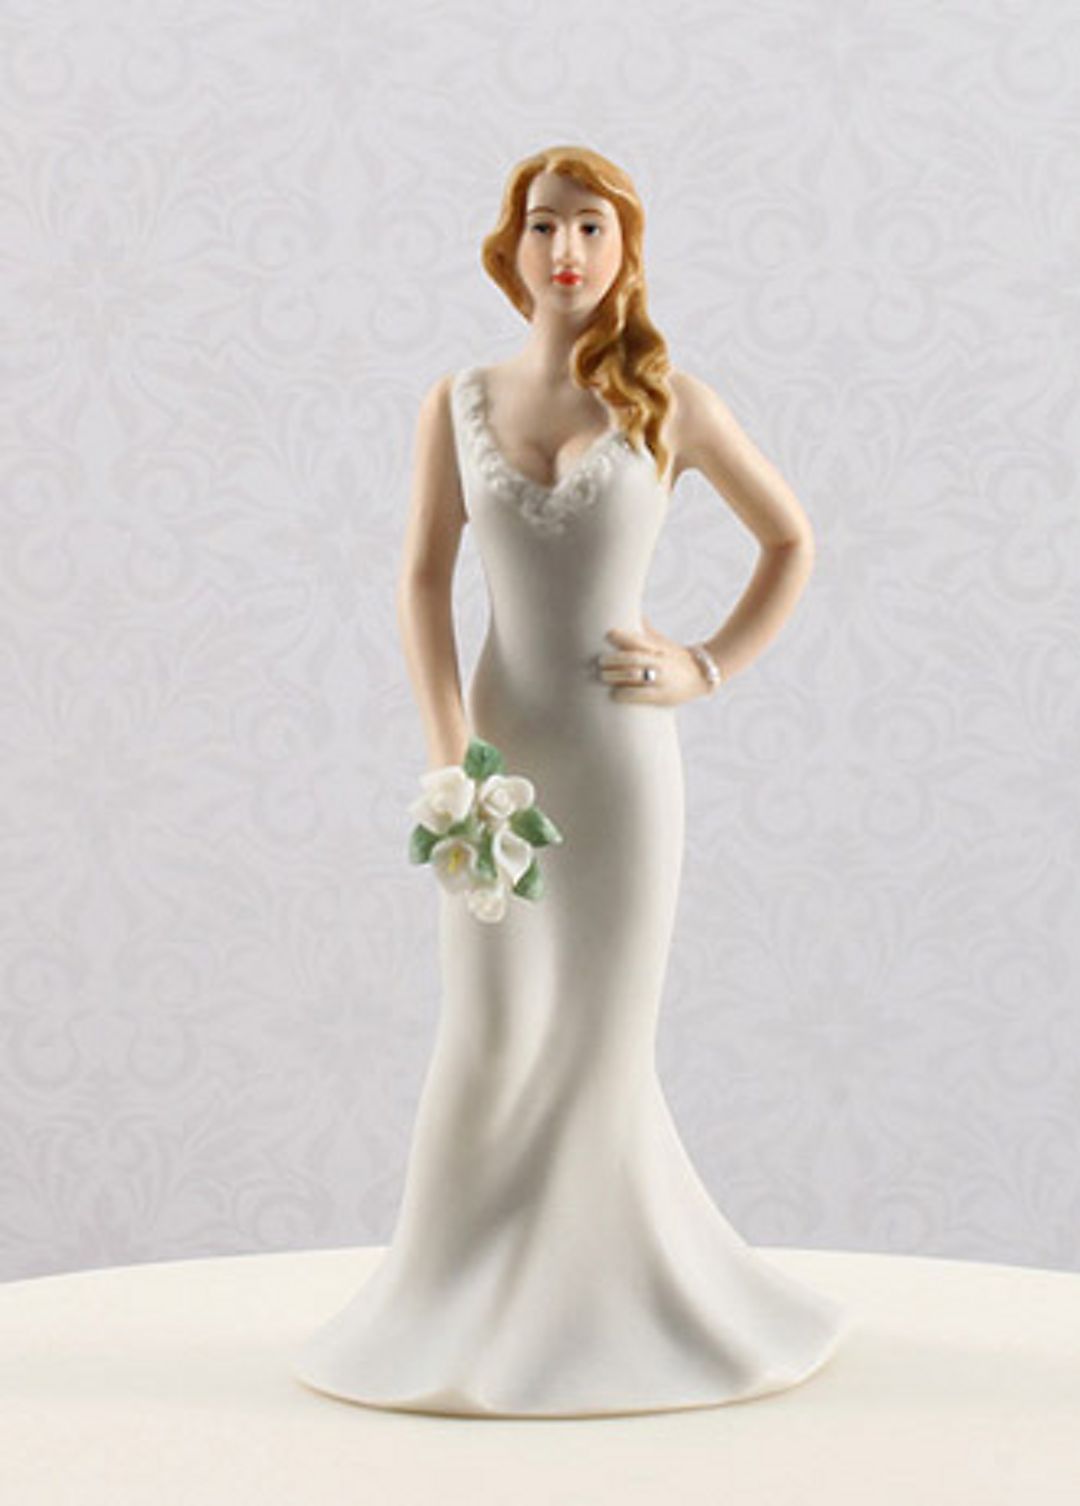 The Curvy Bride Cake Topper Image